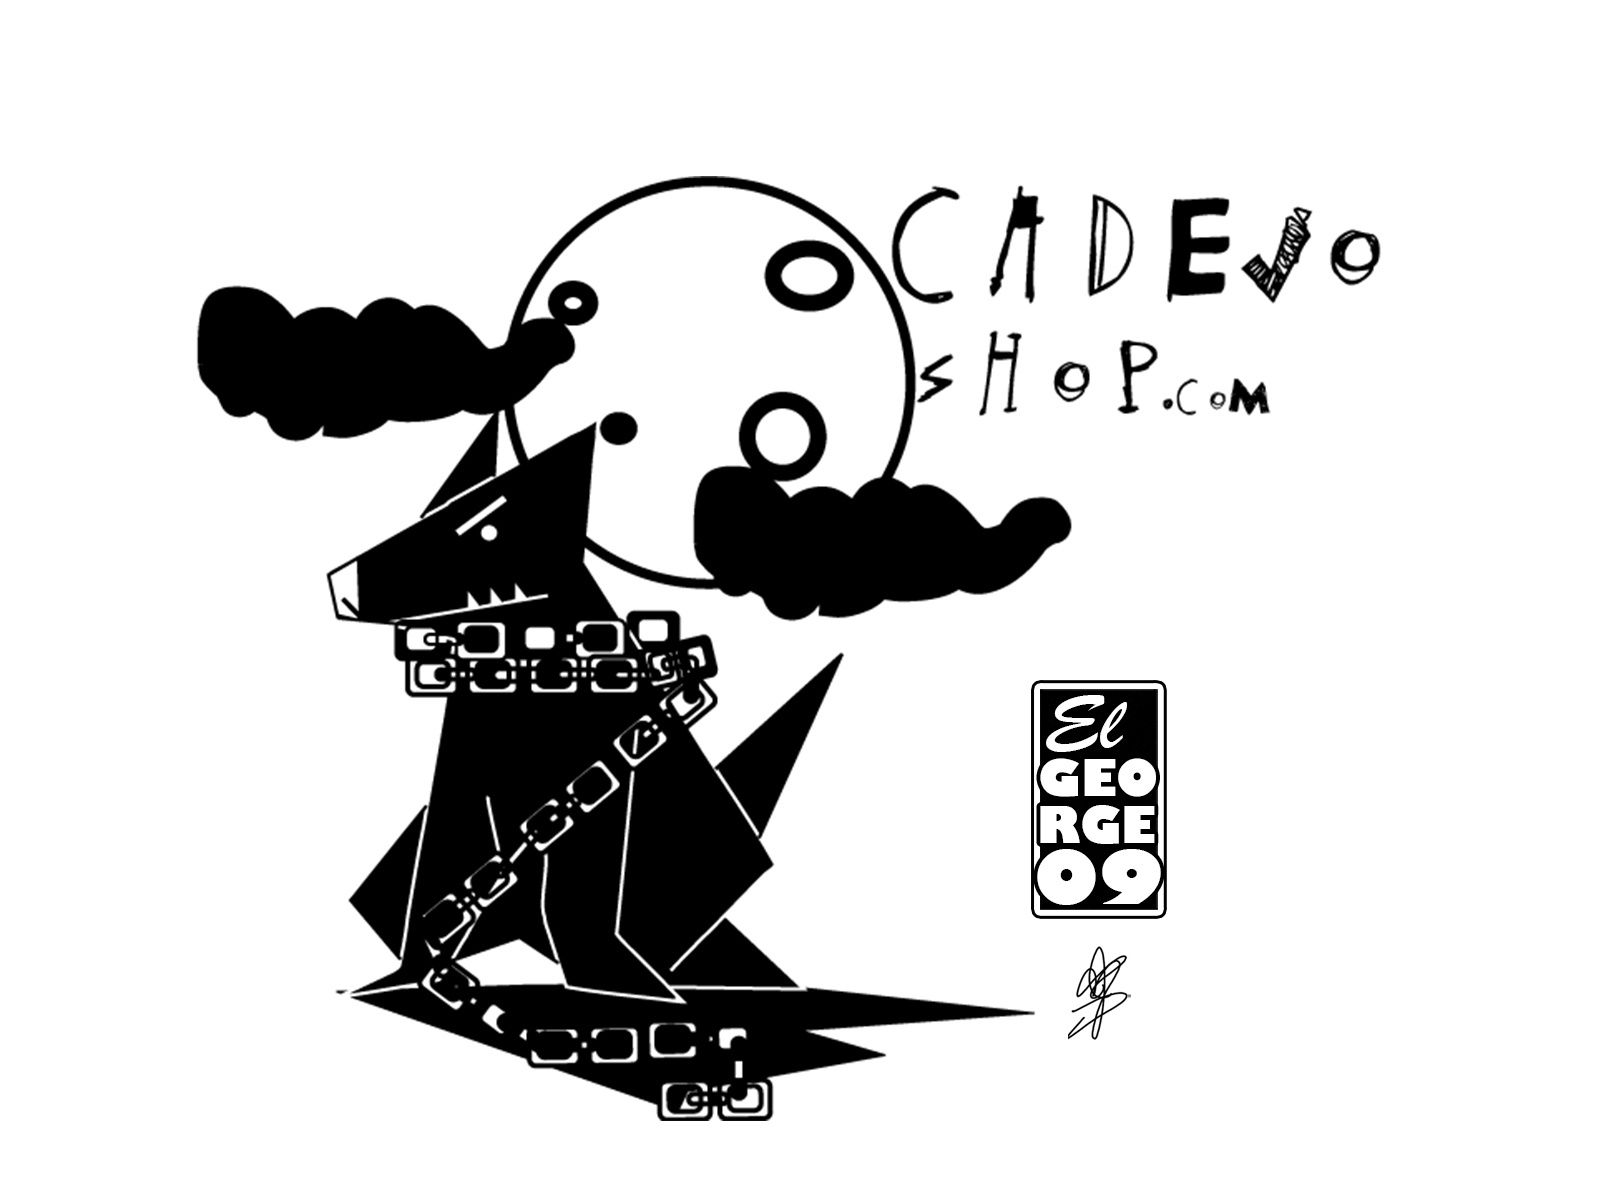 Cadejo Shop Logo